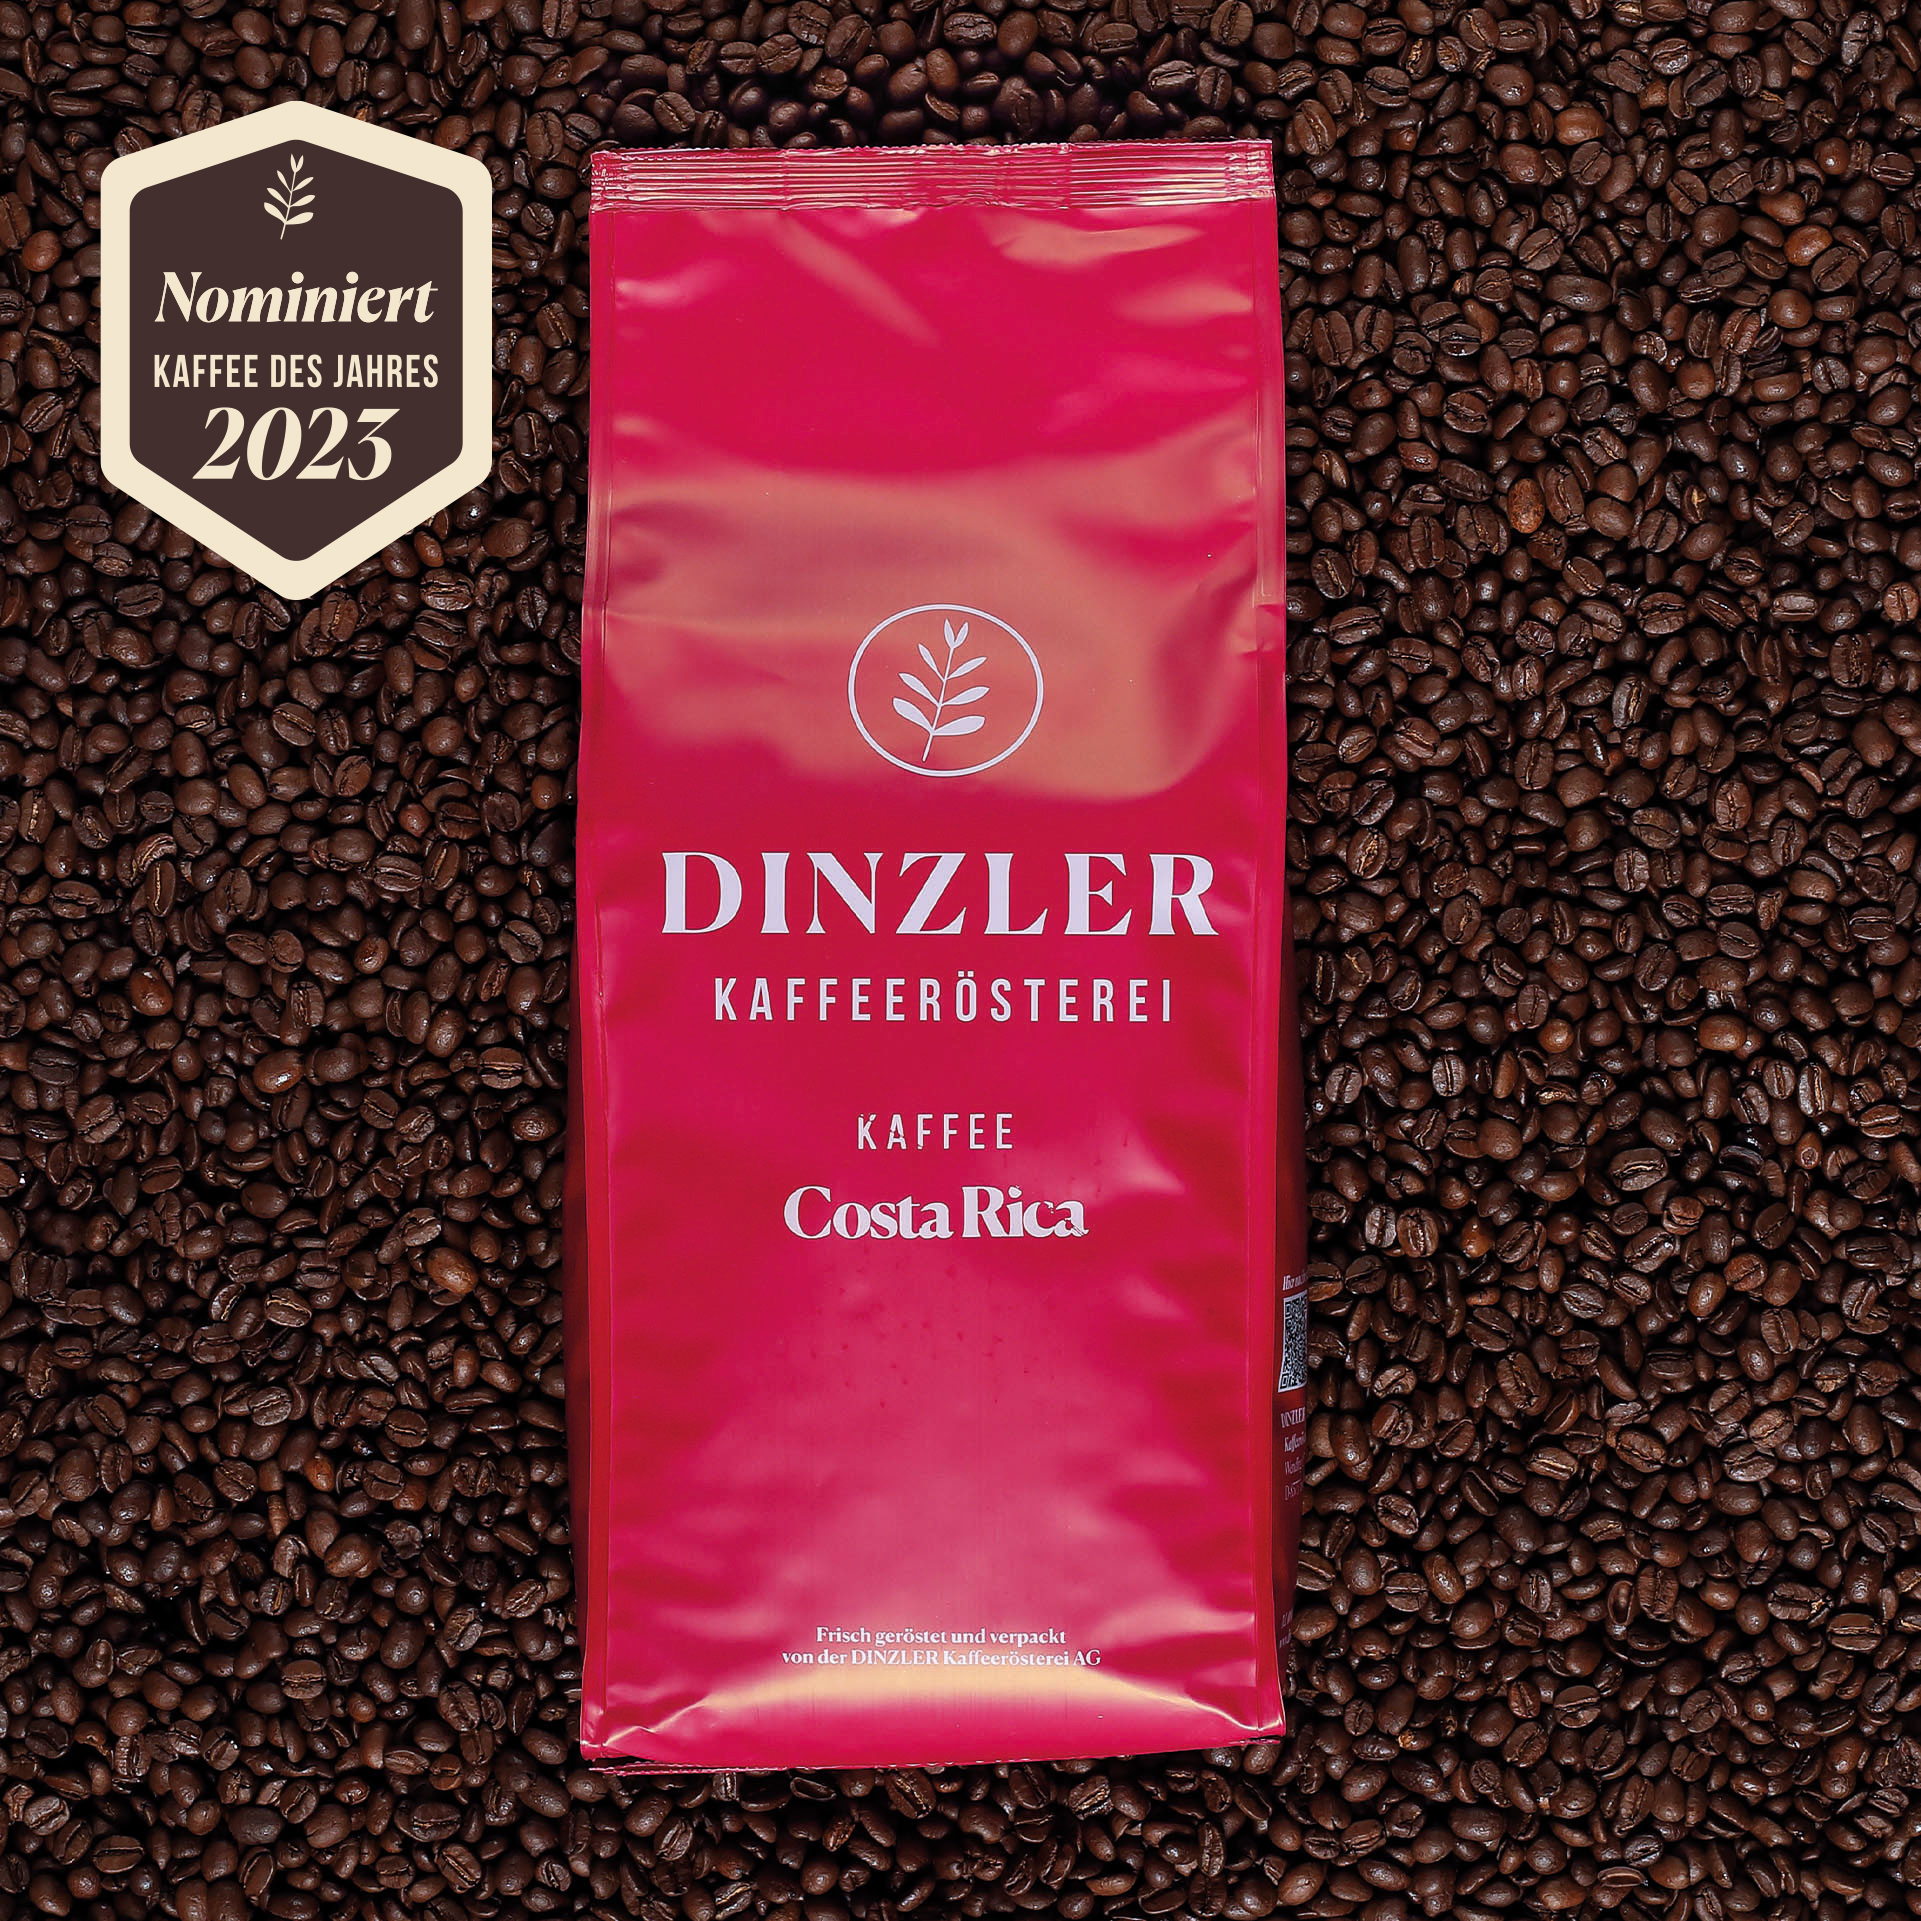 Produktbild DINZLER Kaffee Costa Rica| DINZLER Kaffeerösterei